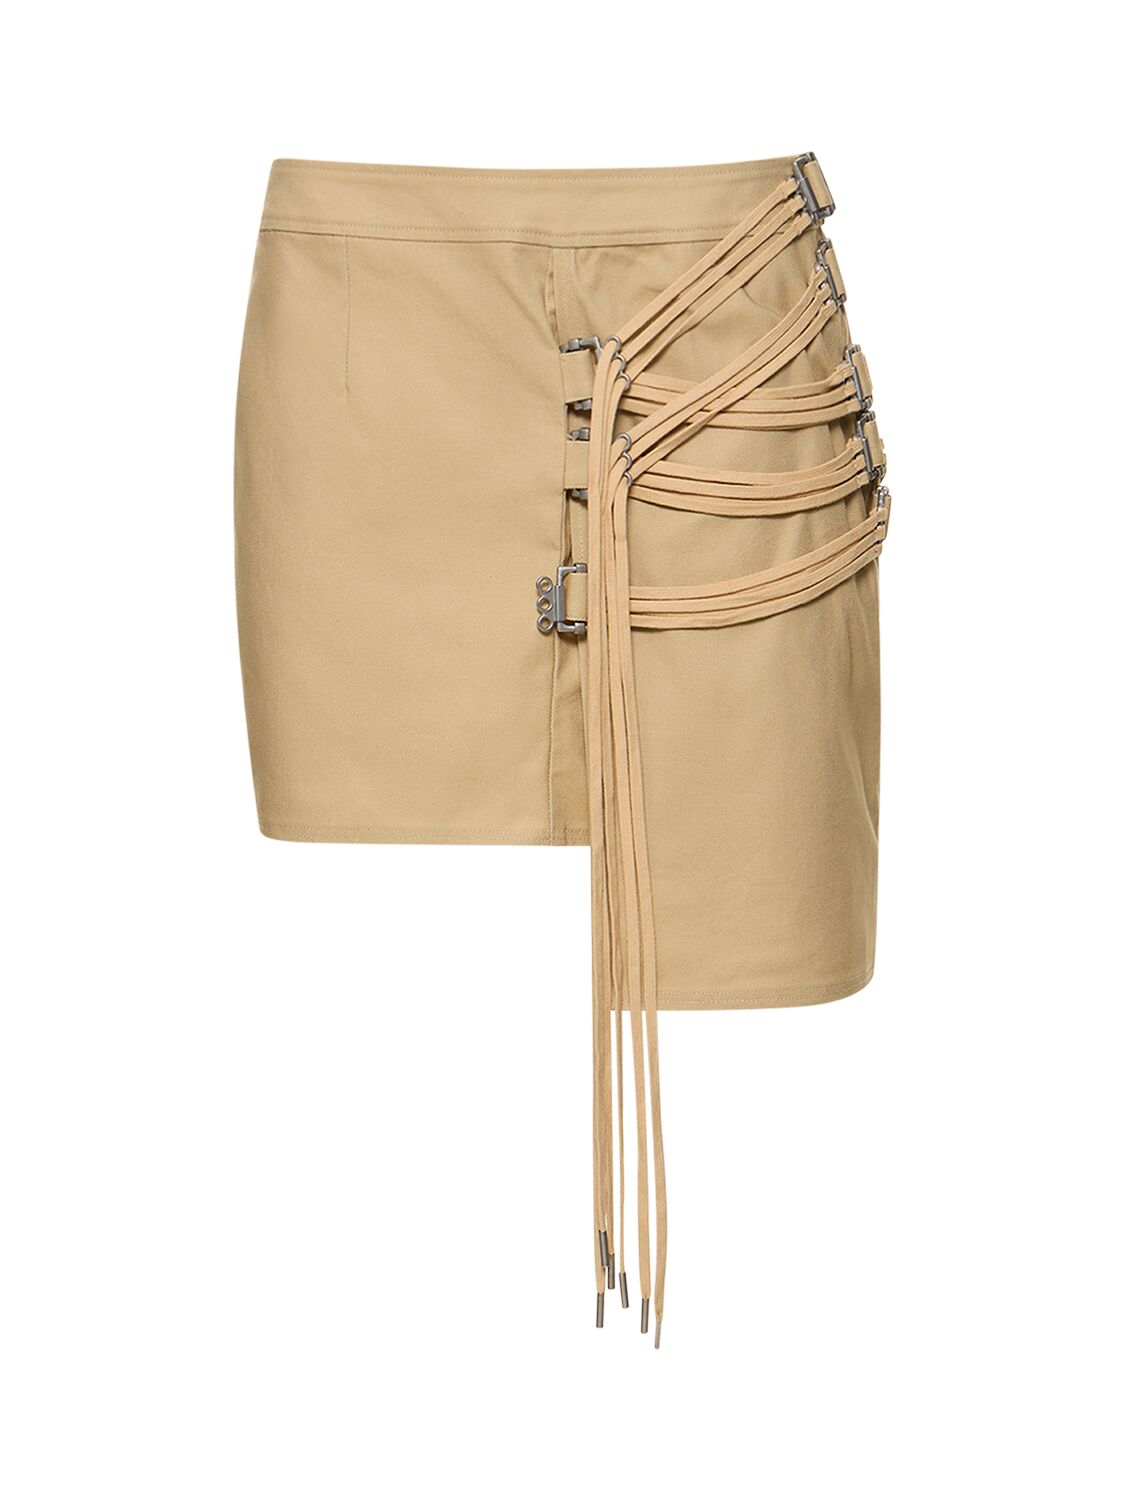 Image of Mini Cotton Skirt W/ Strings